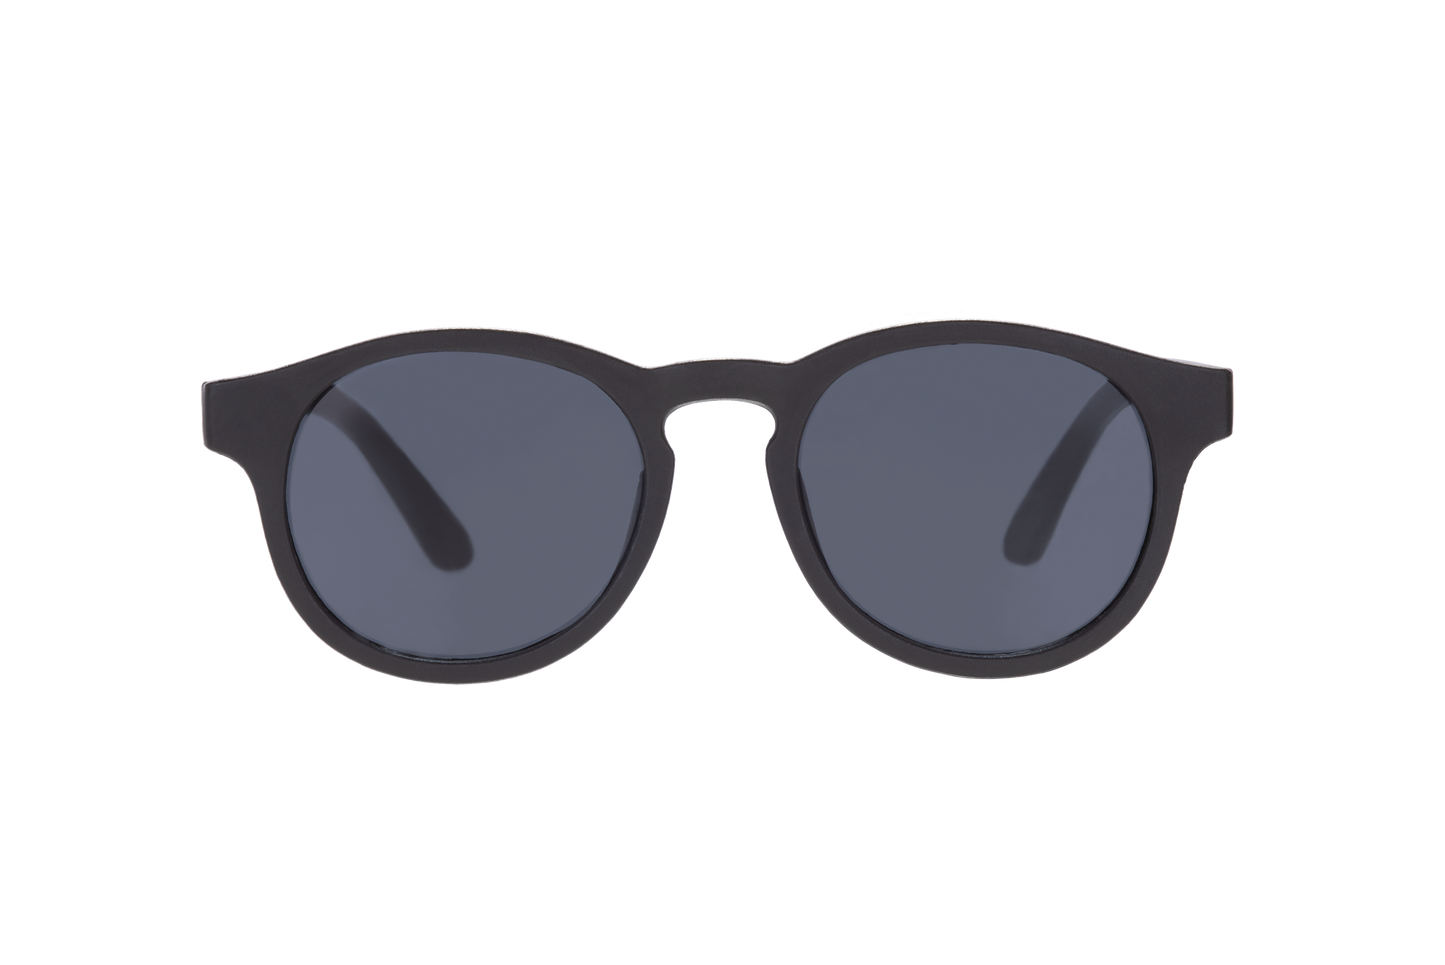 Kids' Sunglasses - Limited Edition Keyhole - Black Ops Black